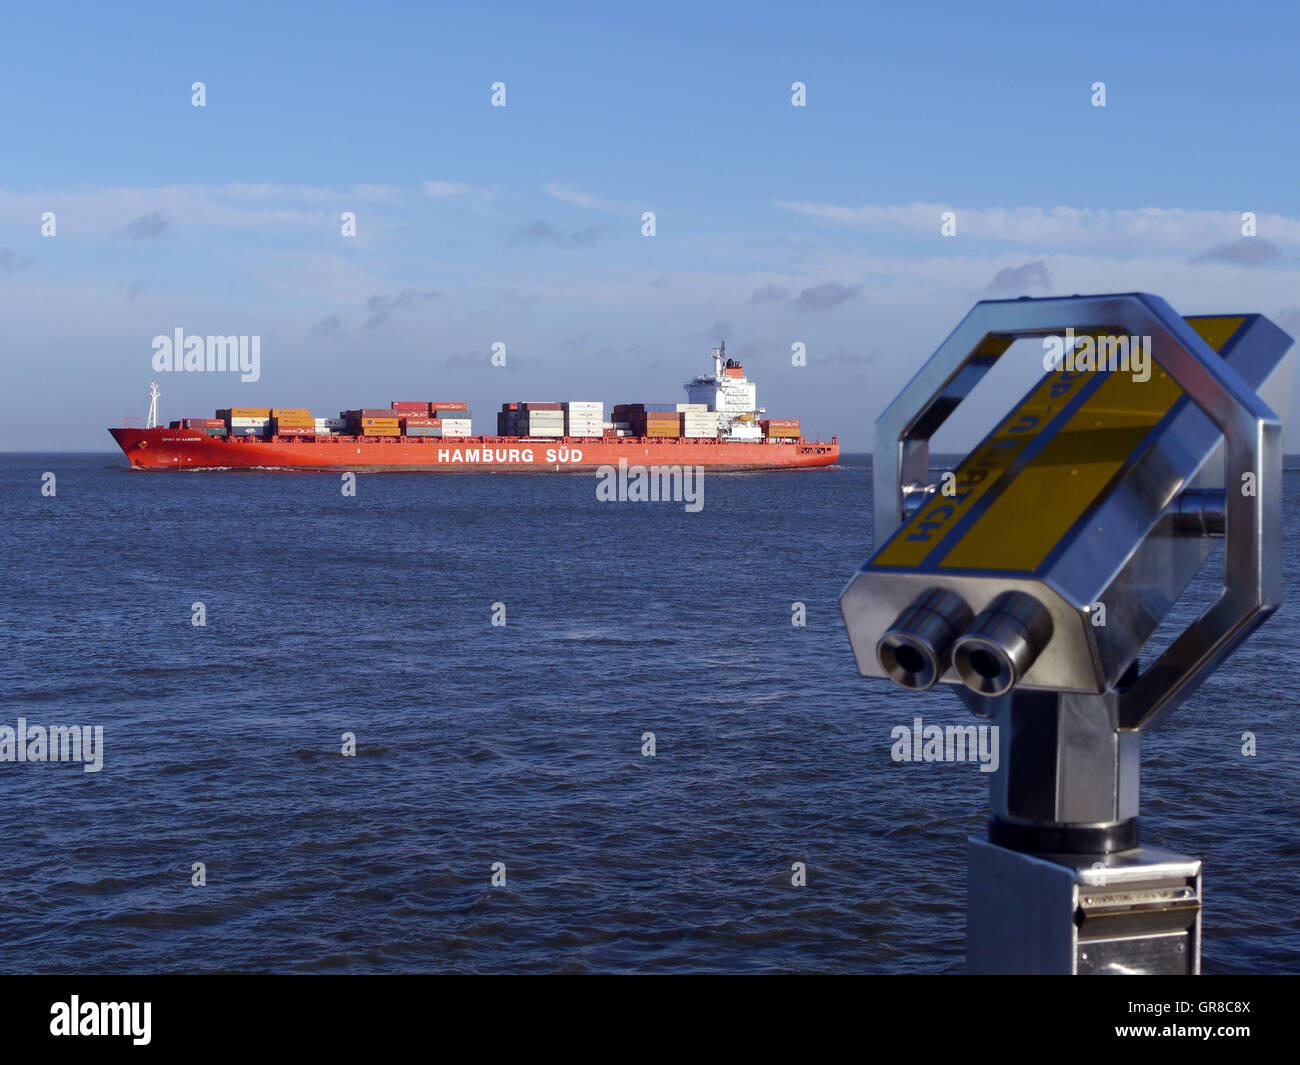 Container Ship Of Shipping Company Hamburg Süd Stock Photo